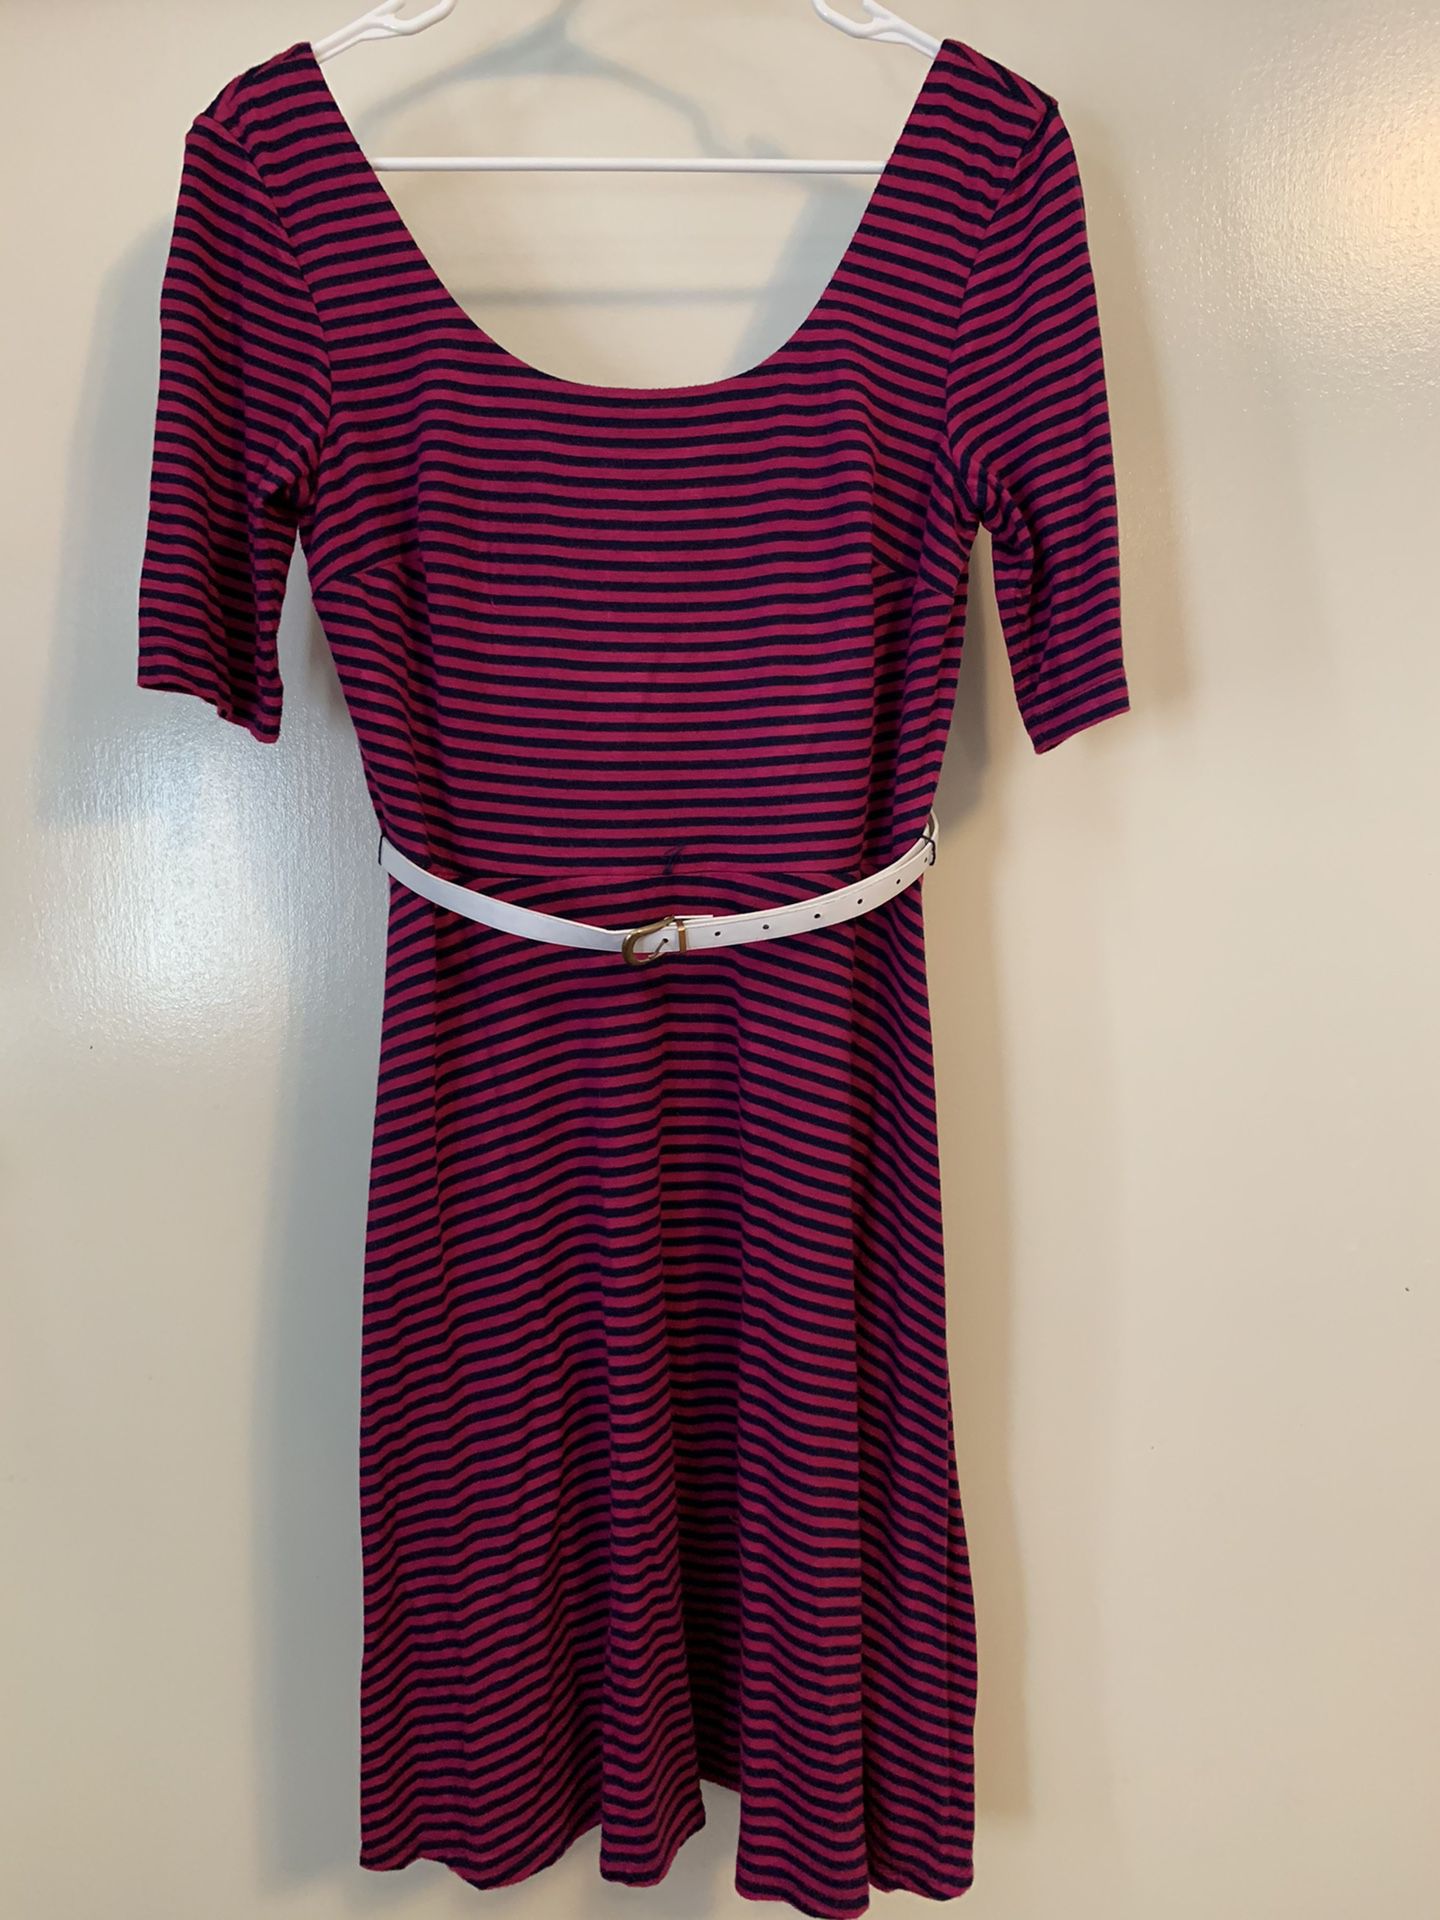 ALYX Striped Purple Dress, 3/4 Sleeves